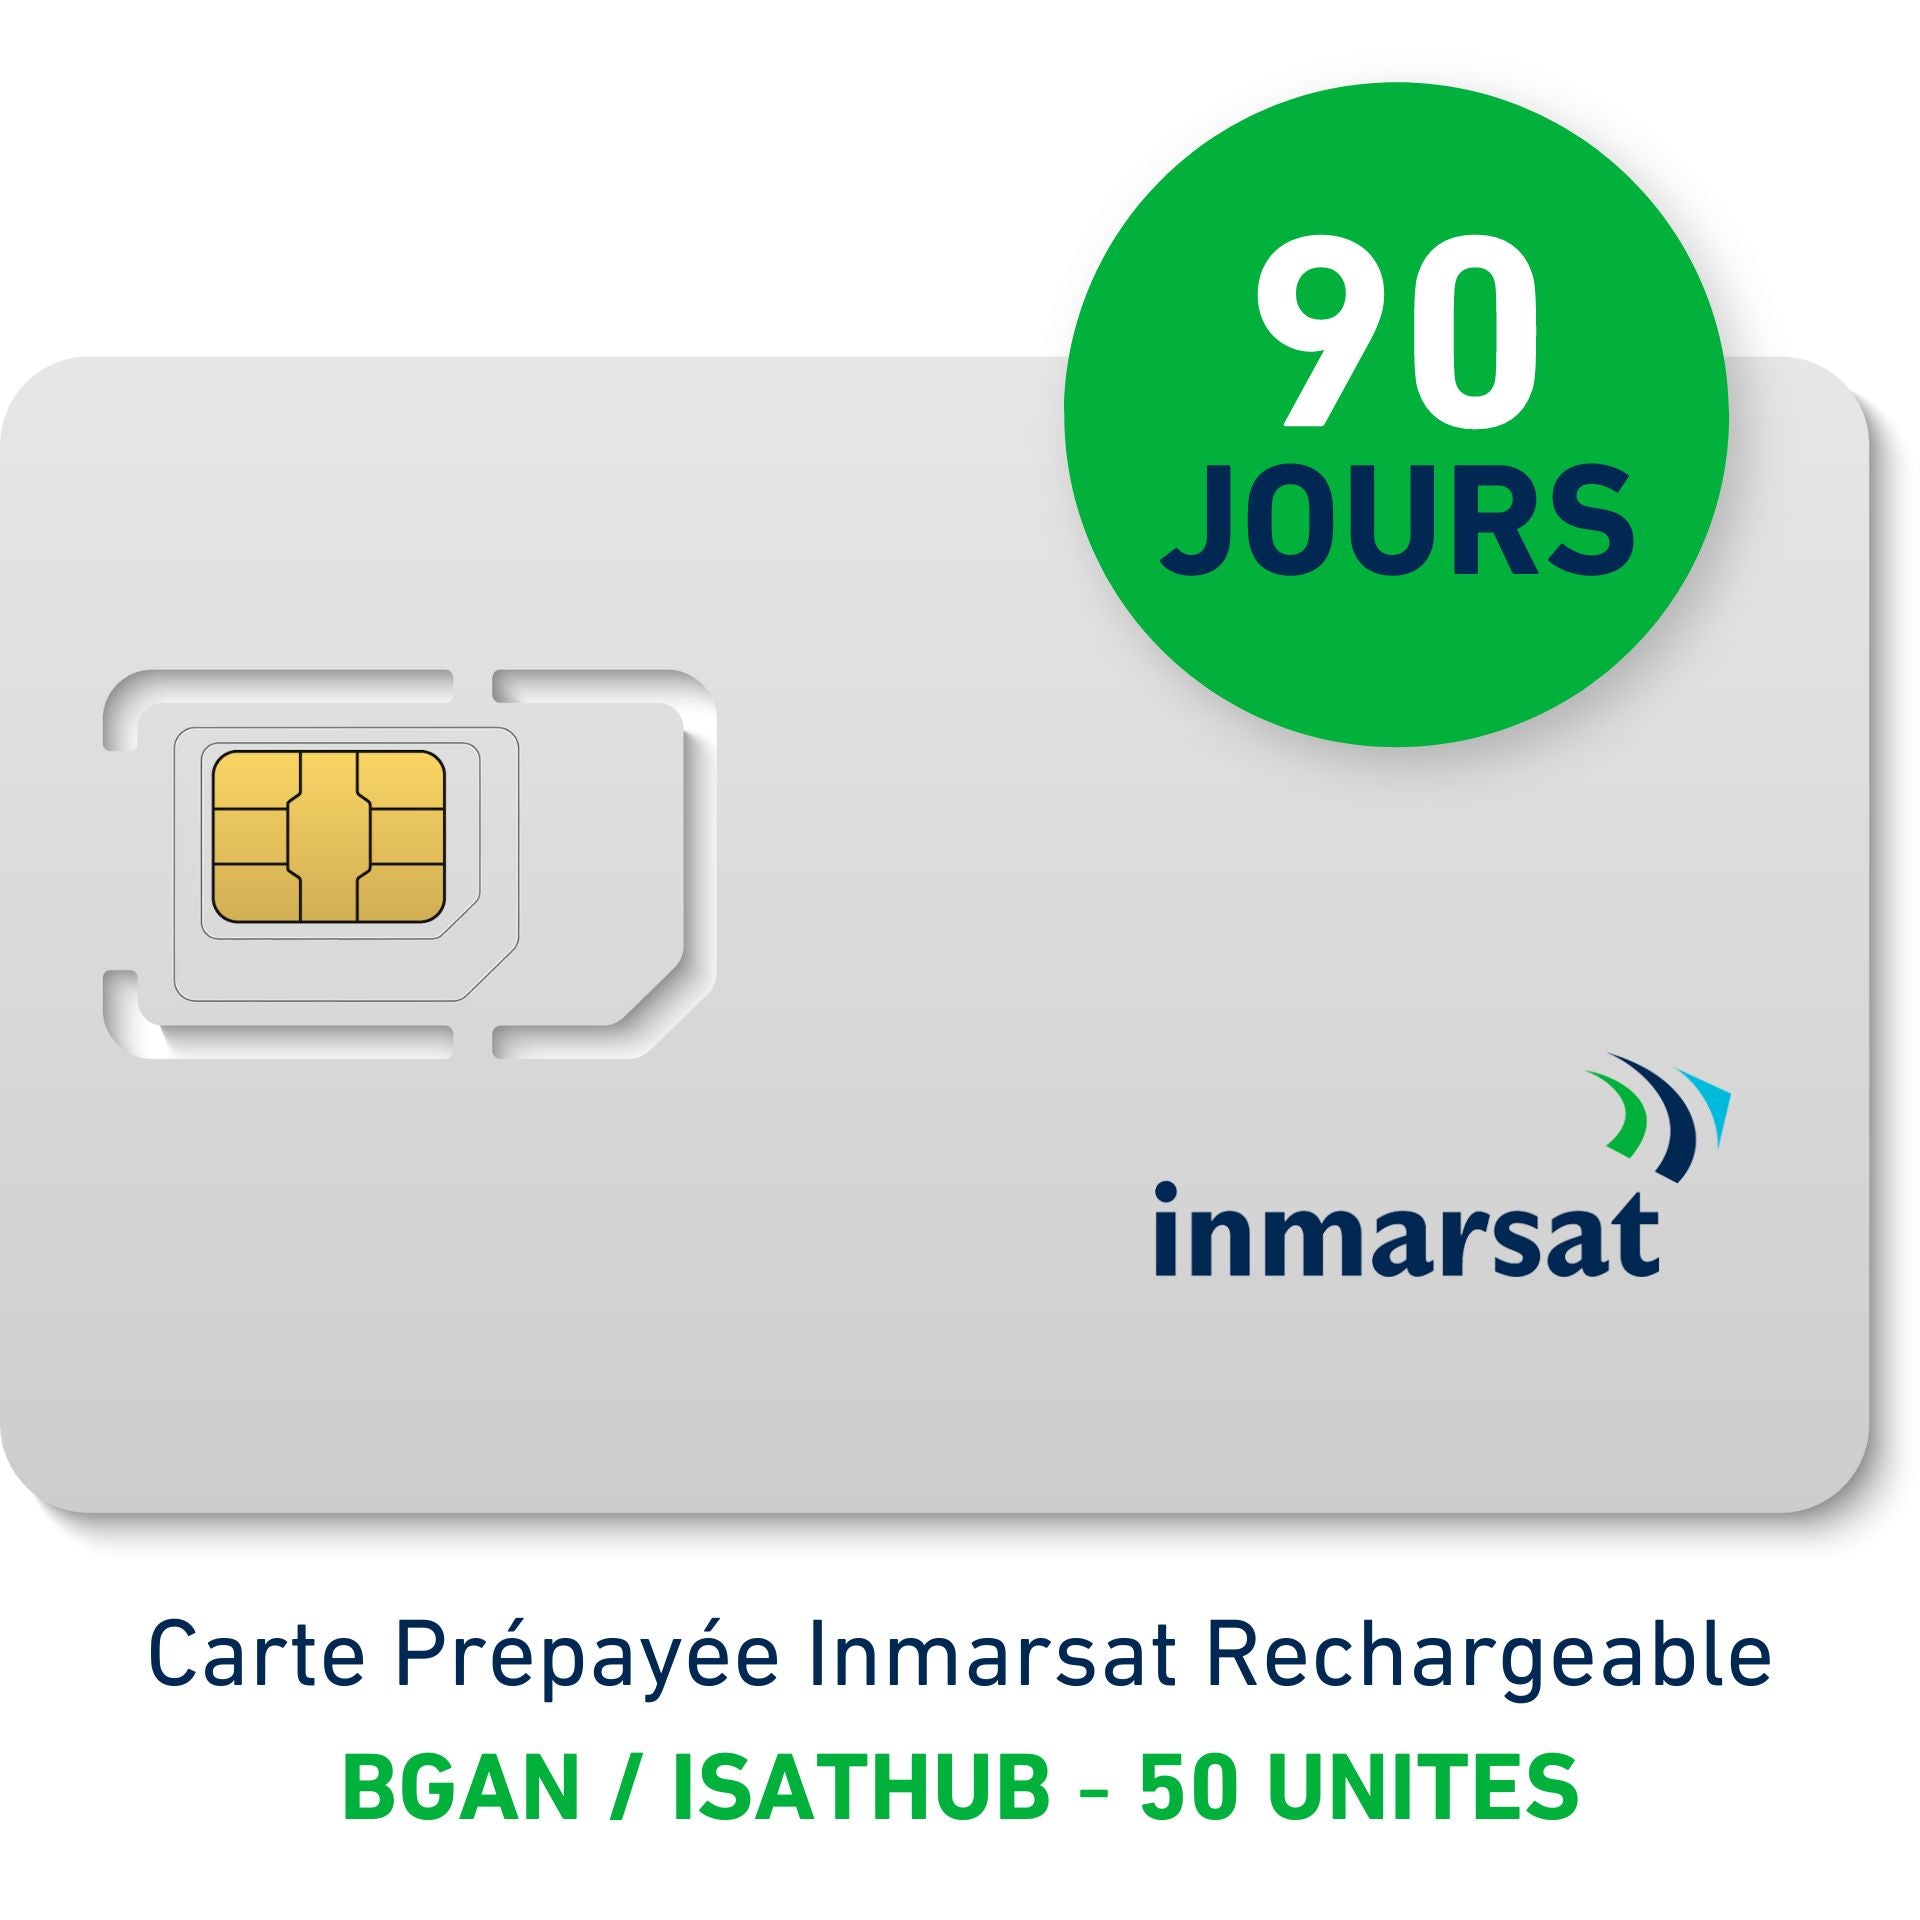 INMARSAT Rechargeable BGAN/IsatHub Prepaid Card - 50 UNITS - 90 DAYS